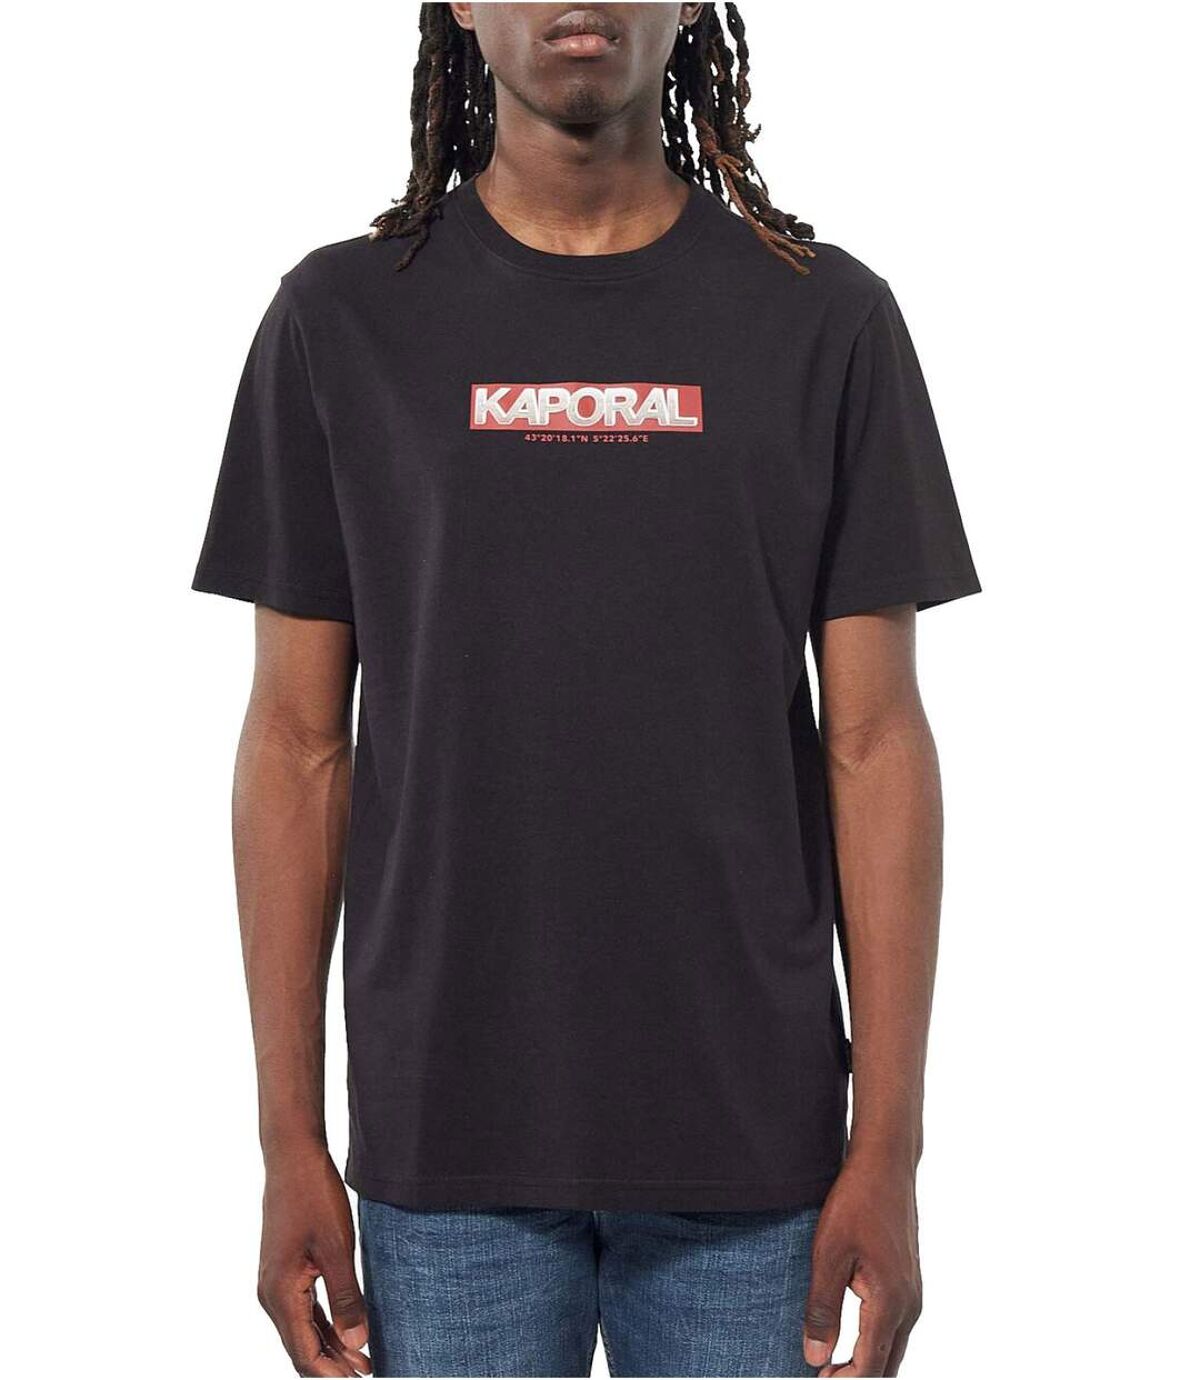 Tee shirt logo en coton bio  -  Kaporal - Homme